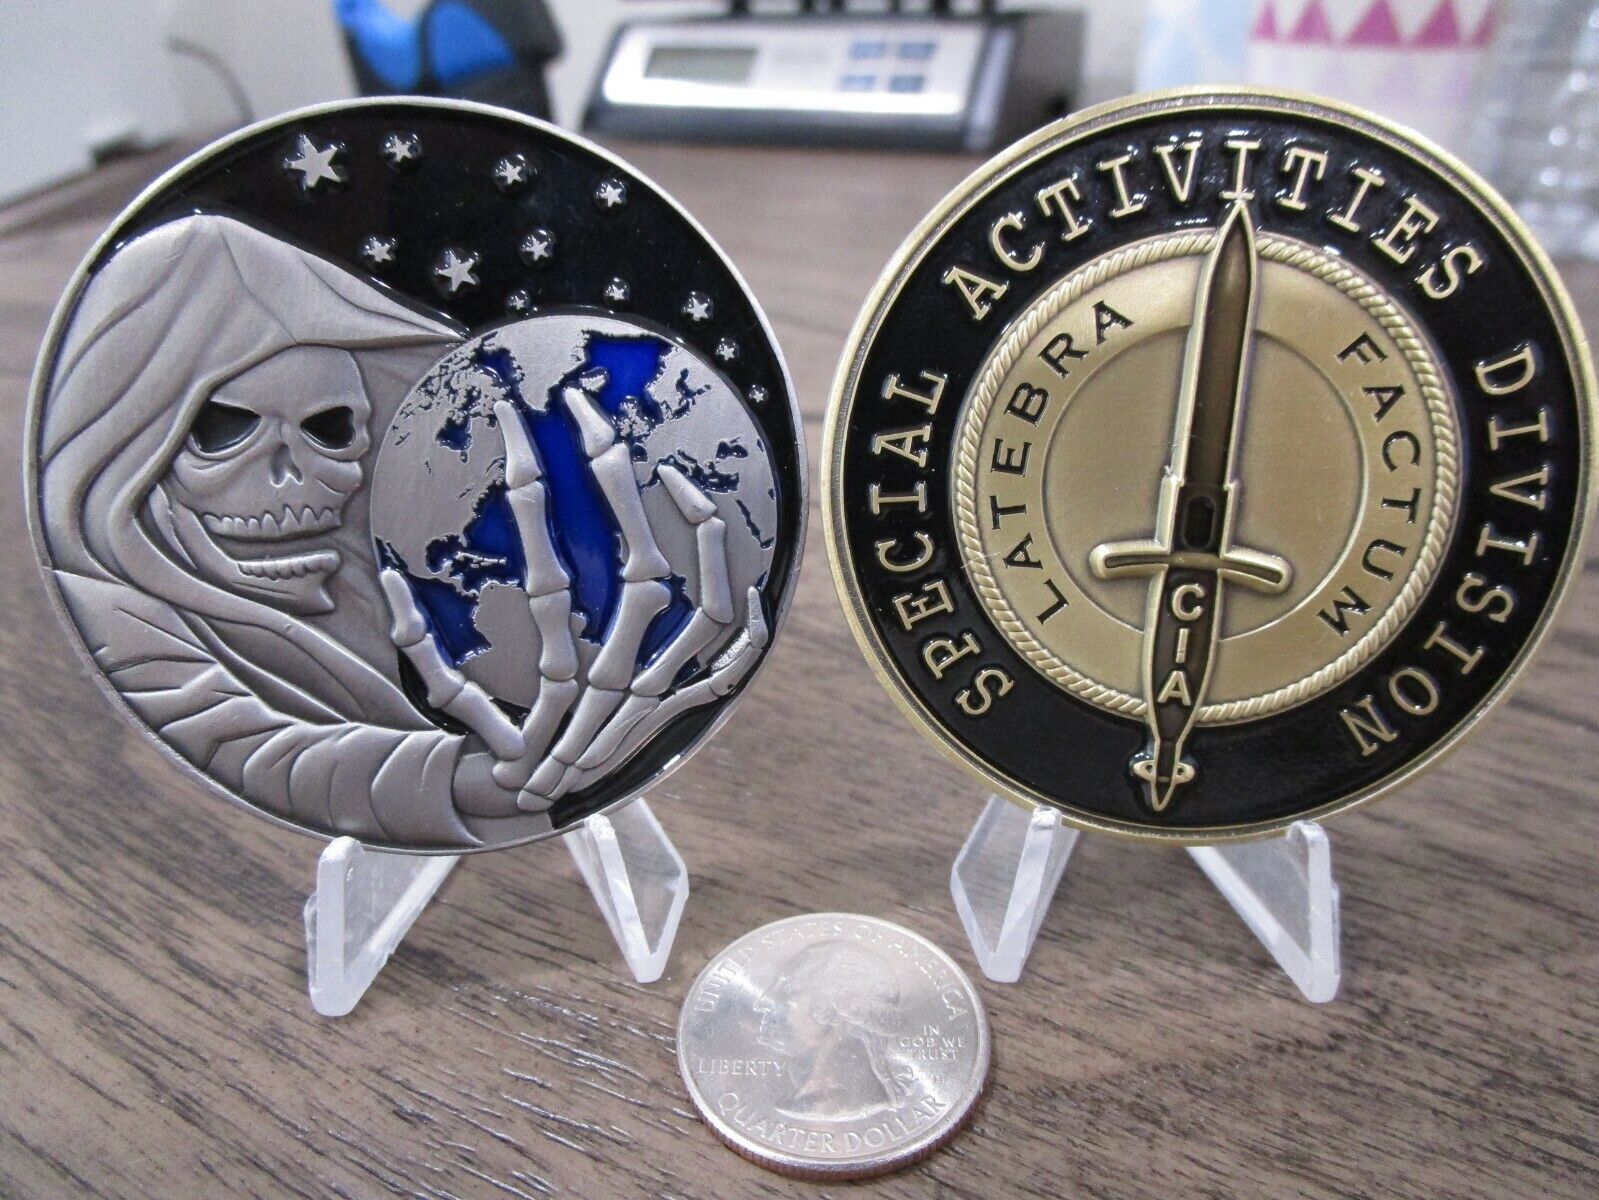 Special Activities Division CIA SAD SOG Clandestine Grim Reaper Challenge Coin